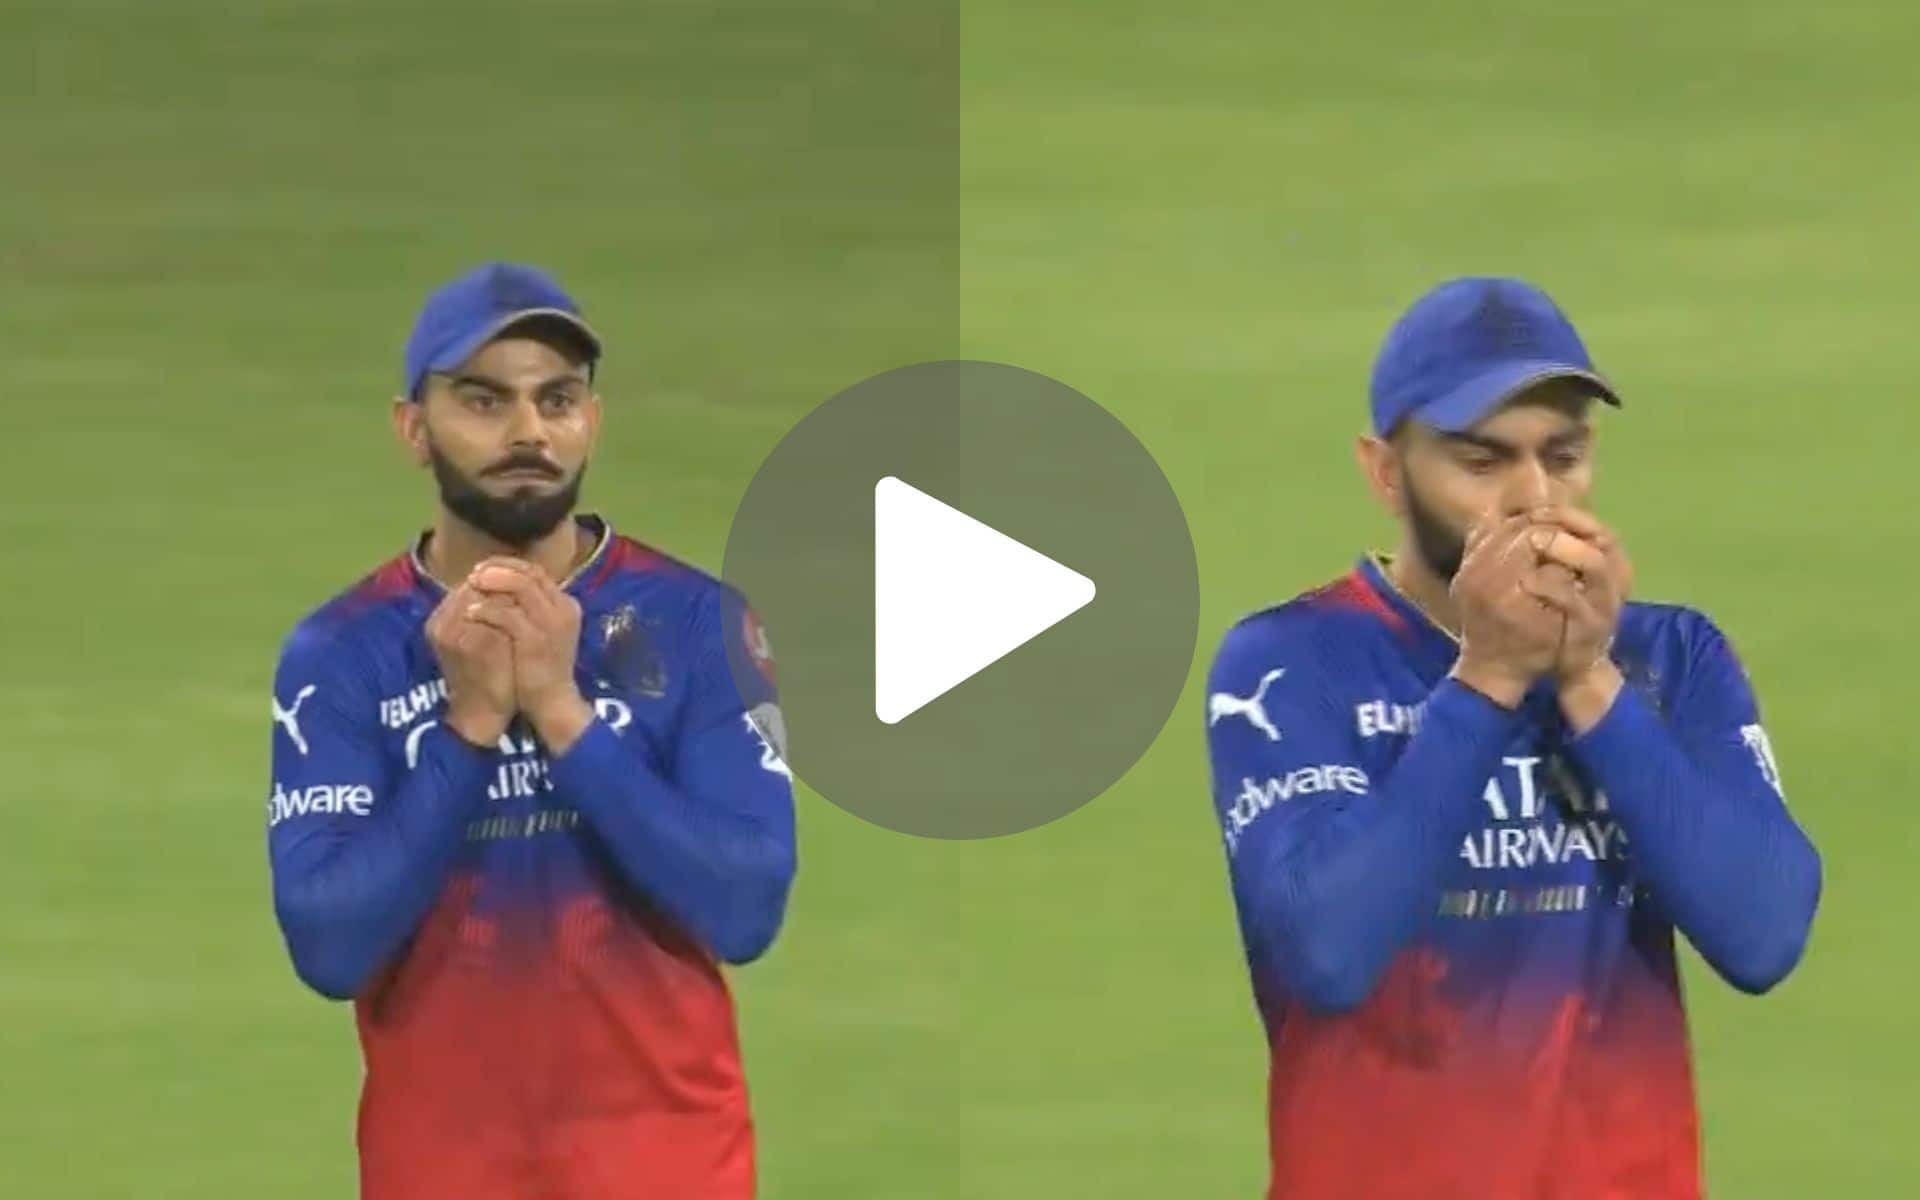 [Watch] ‘Expressionless’ Virat Kohli Kisses The Ball After Green Crushes 'Sloth' Sai Sudharsan